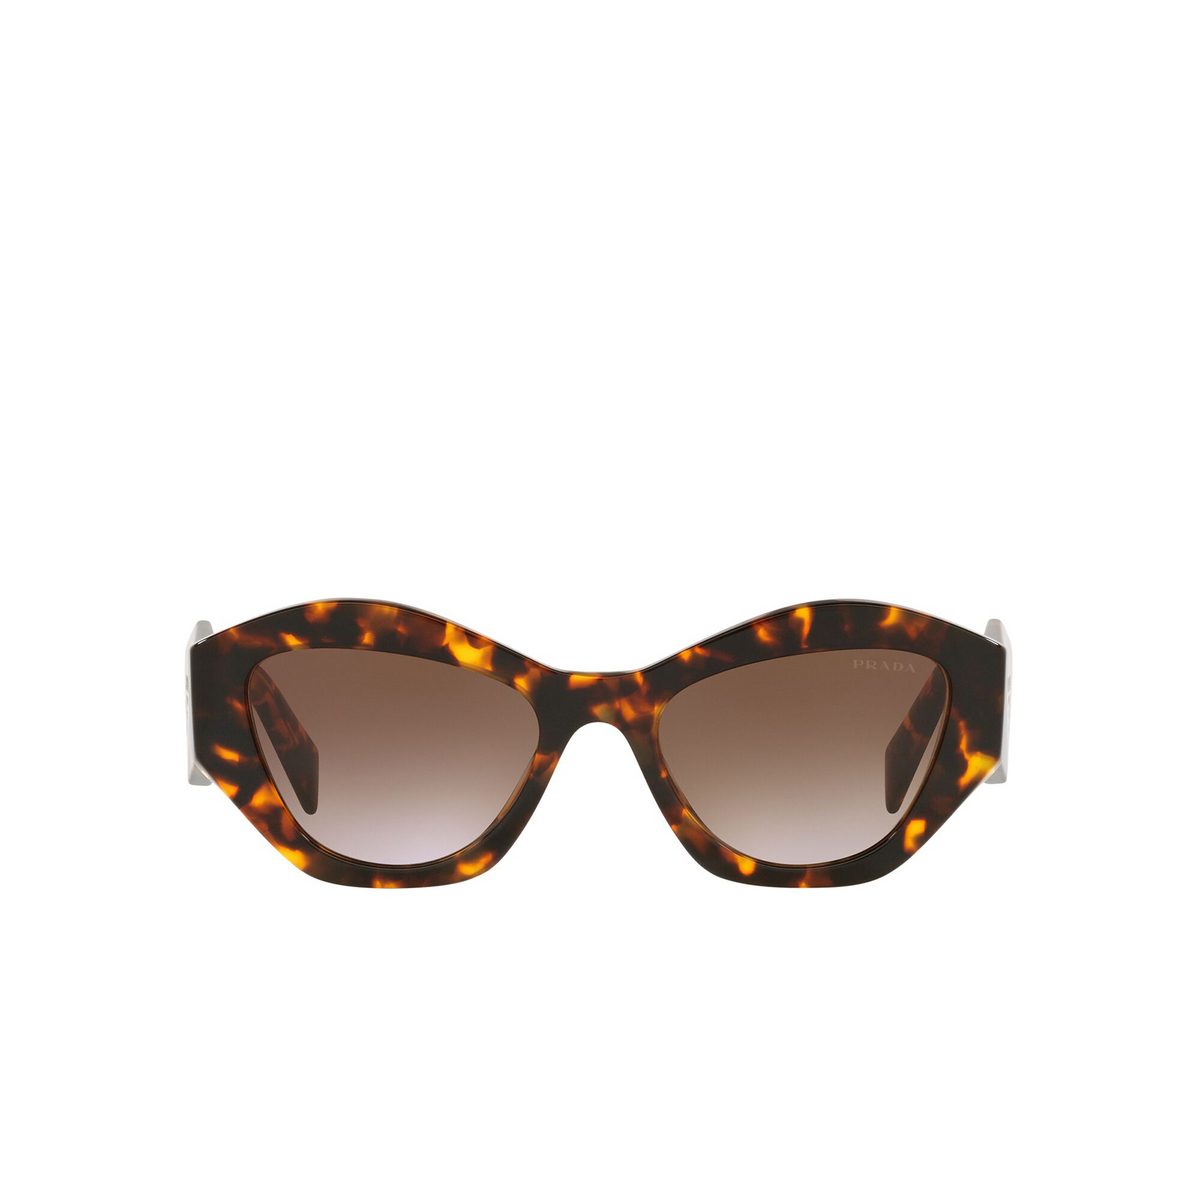 Prada® Irregular Sunglasses: PR 07YS color Honey Havana VAU6S1 - front view.